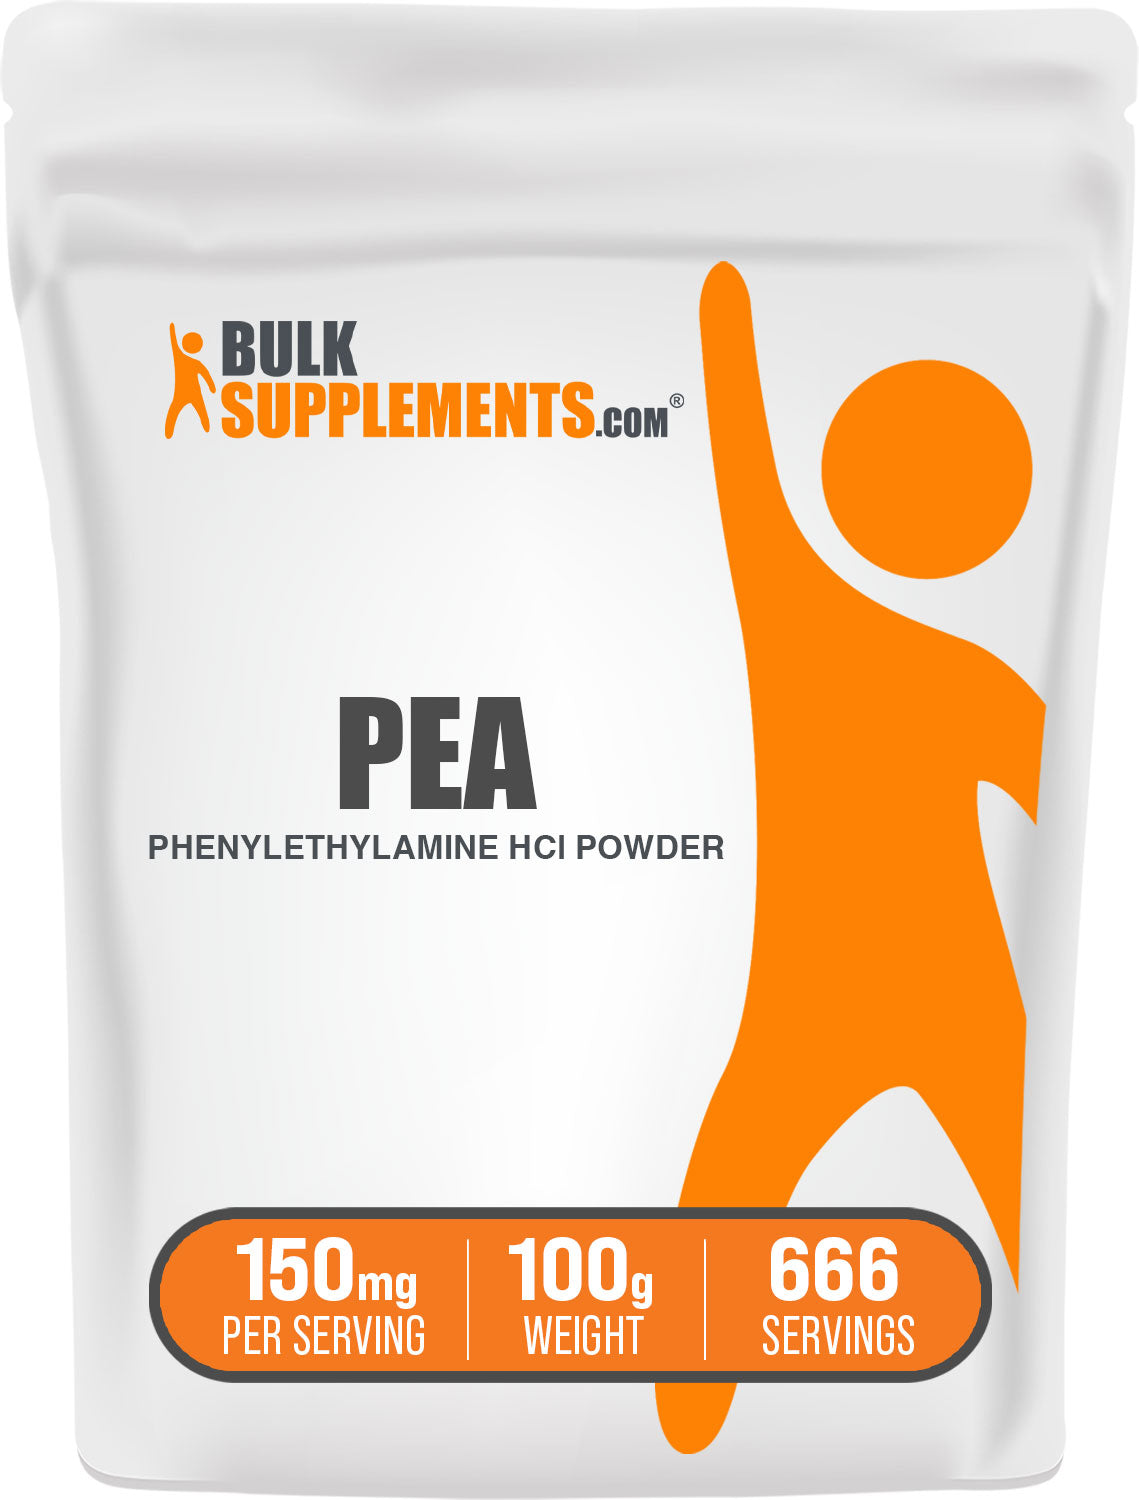 BulkSupplements.com Phenylethylamine HCl (PEA) Powder 100g bag